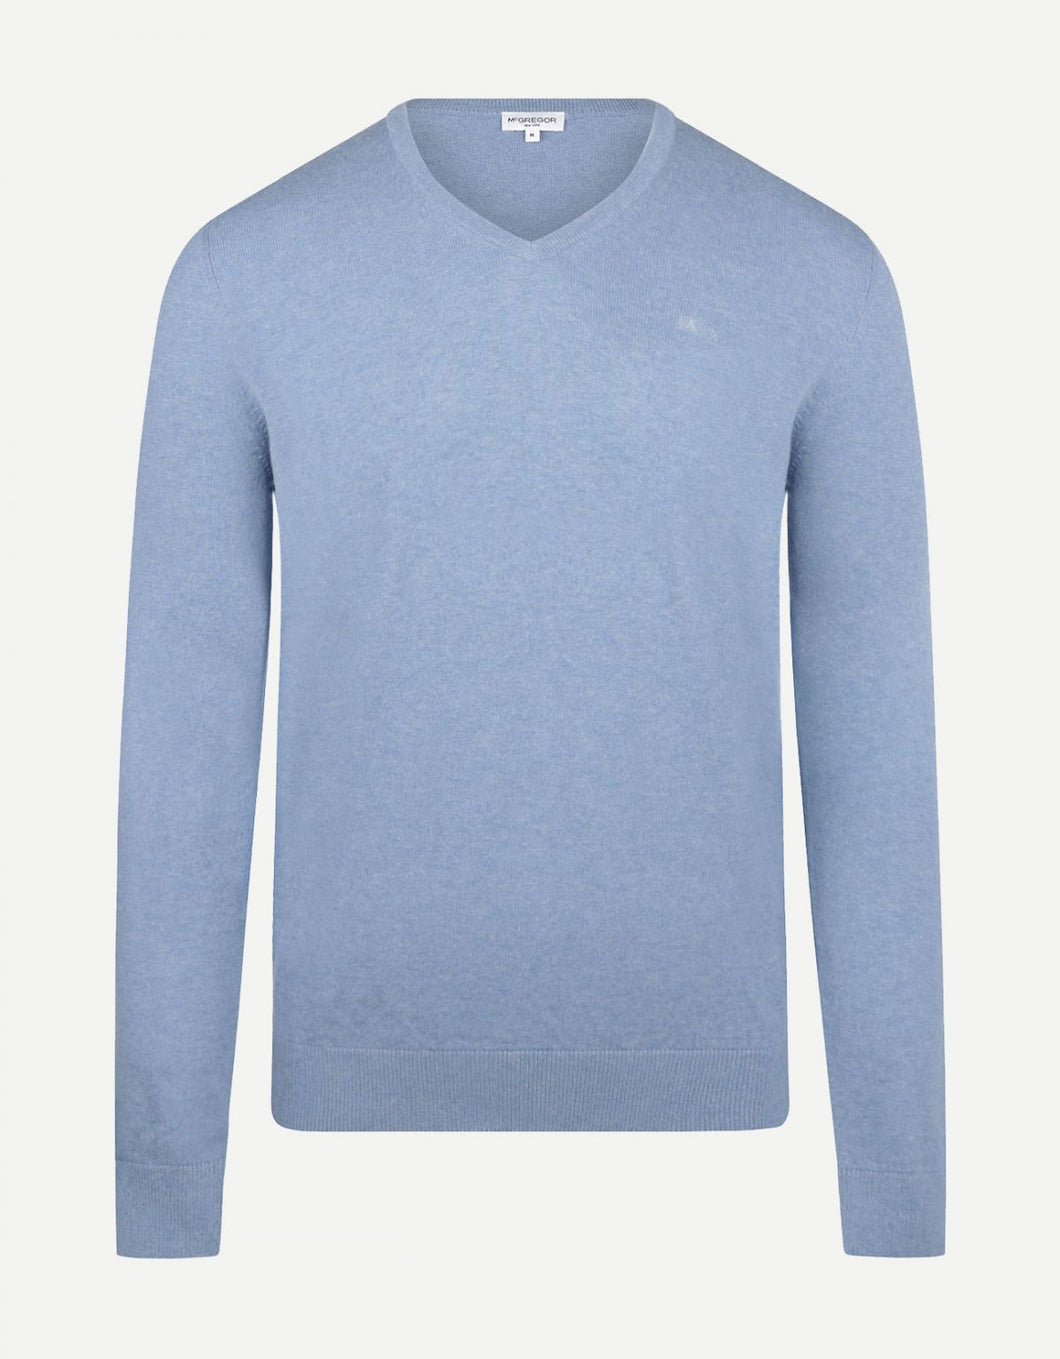 McGregor,  V-Neck Cotton/Merino Blue Sweater